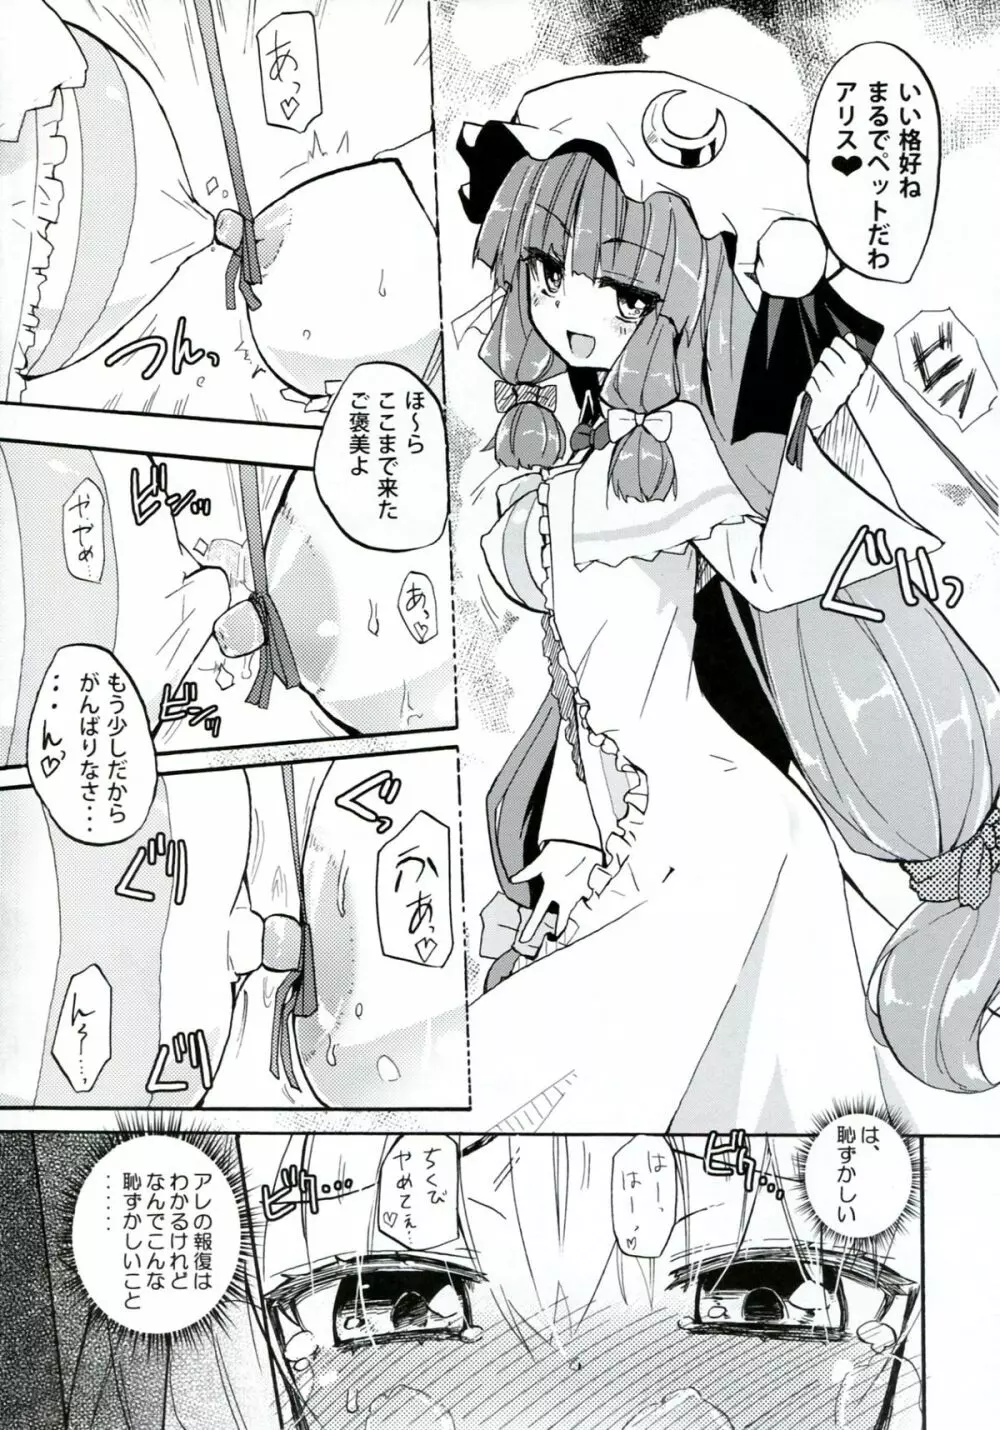 Homuraya Milk ★ Collection 2 - page11